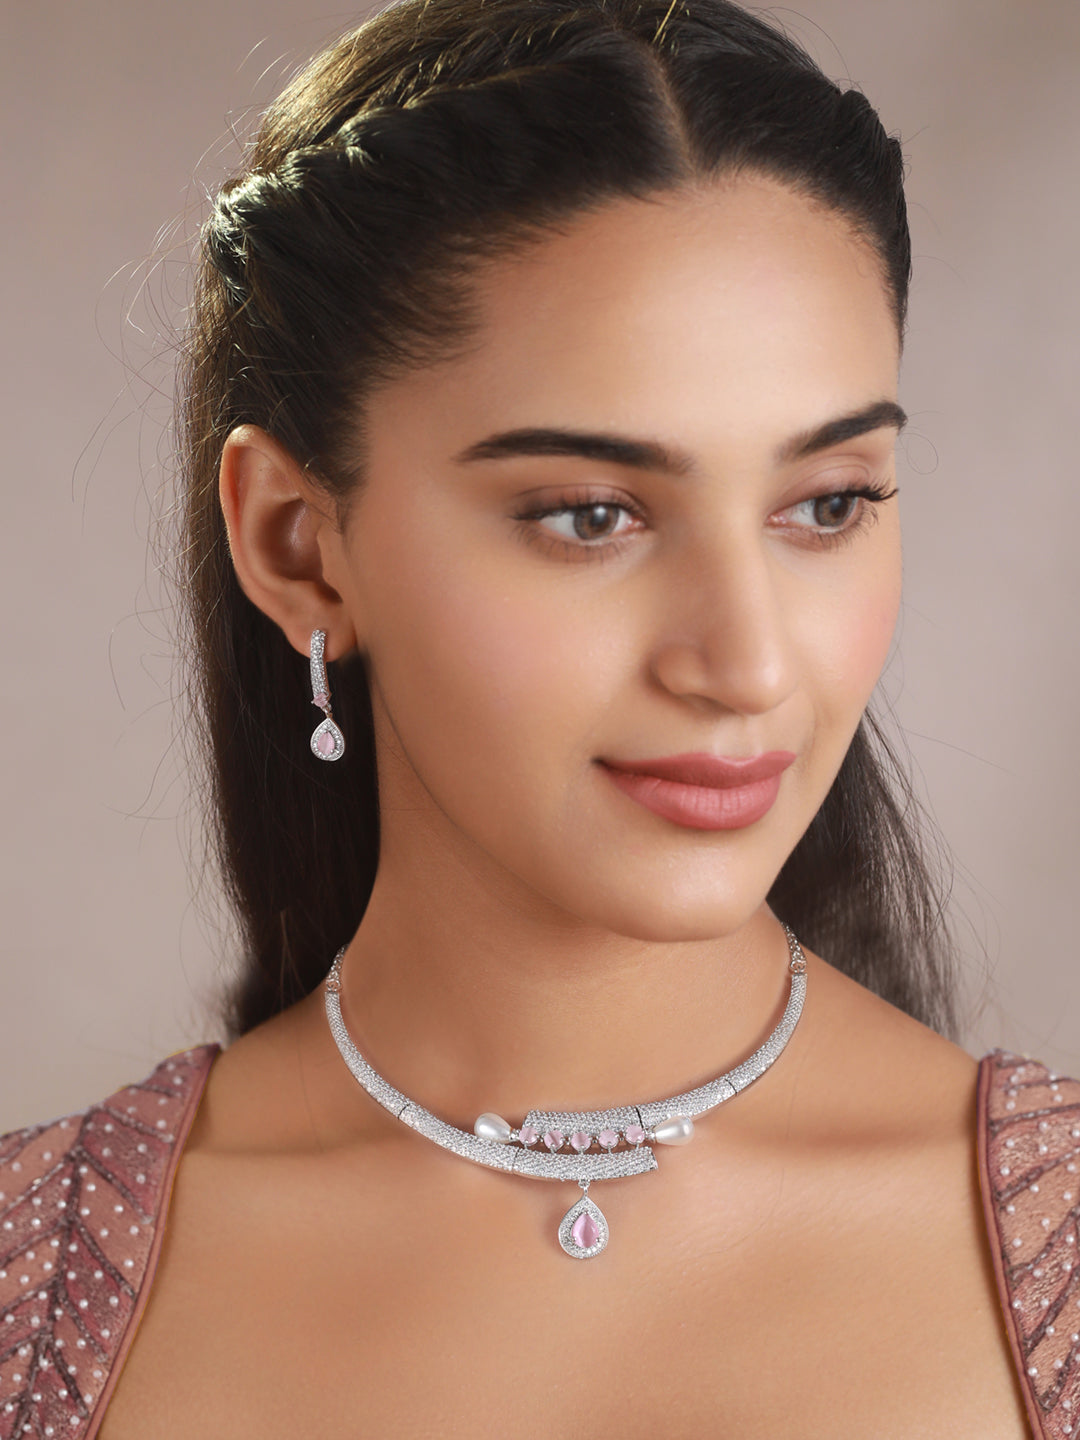 Priyaasi Pink AD Silver-Plated Pear Drop Jewellery Set